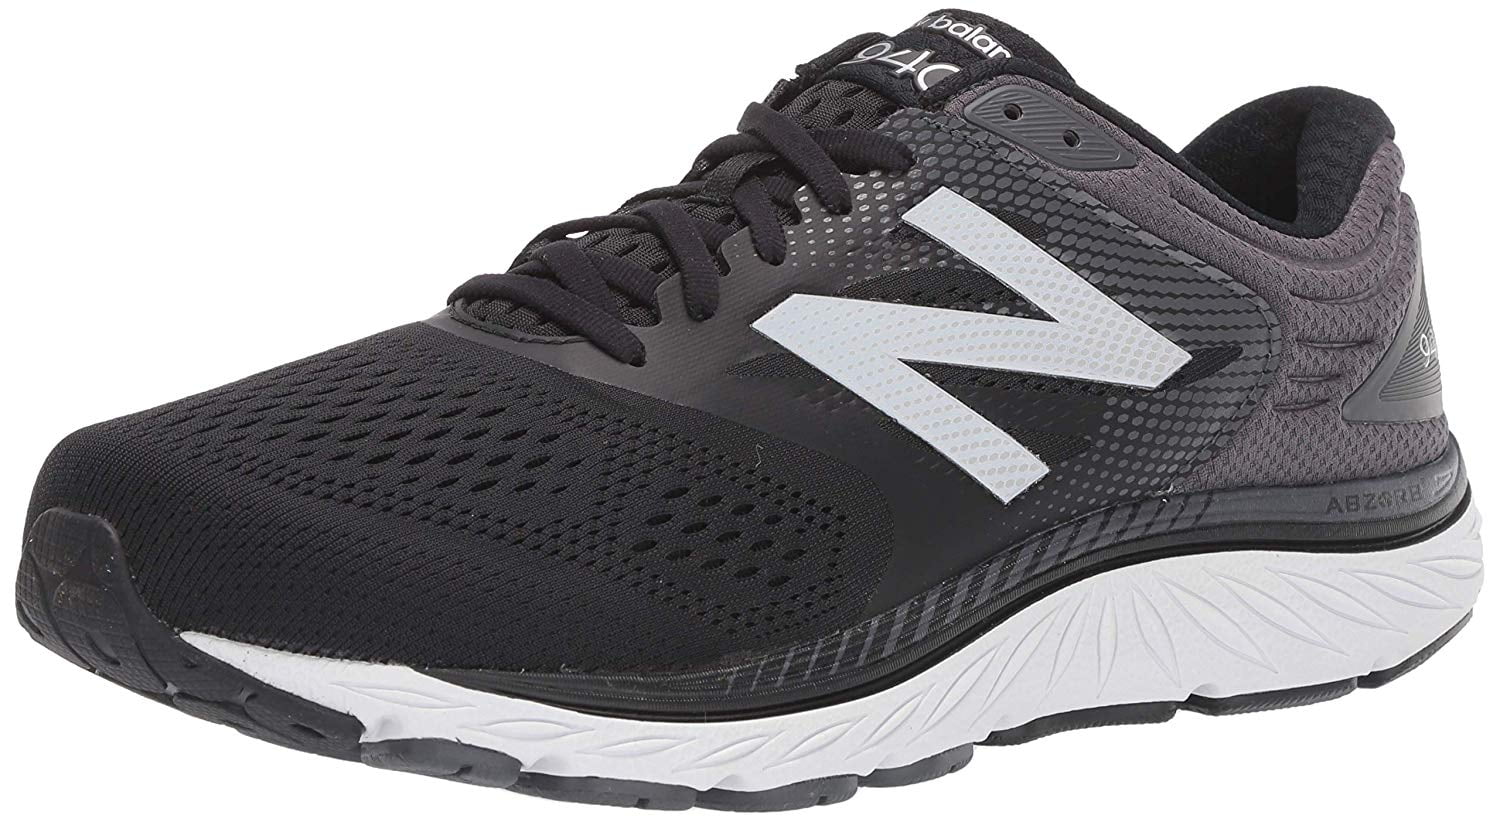 New Balance Men's 940 V4 Running Shoe, Black/Magnet, 9.5 W US | Walmart ...